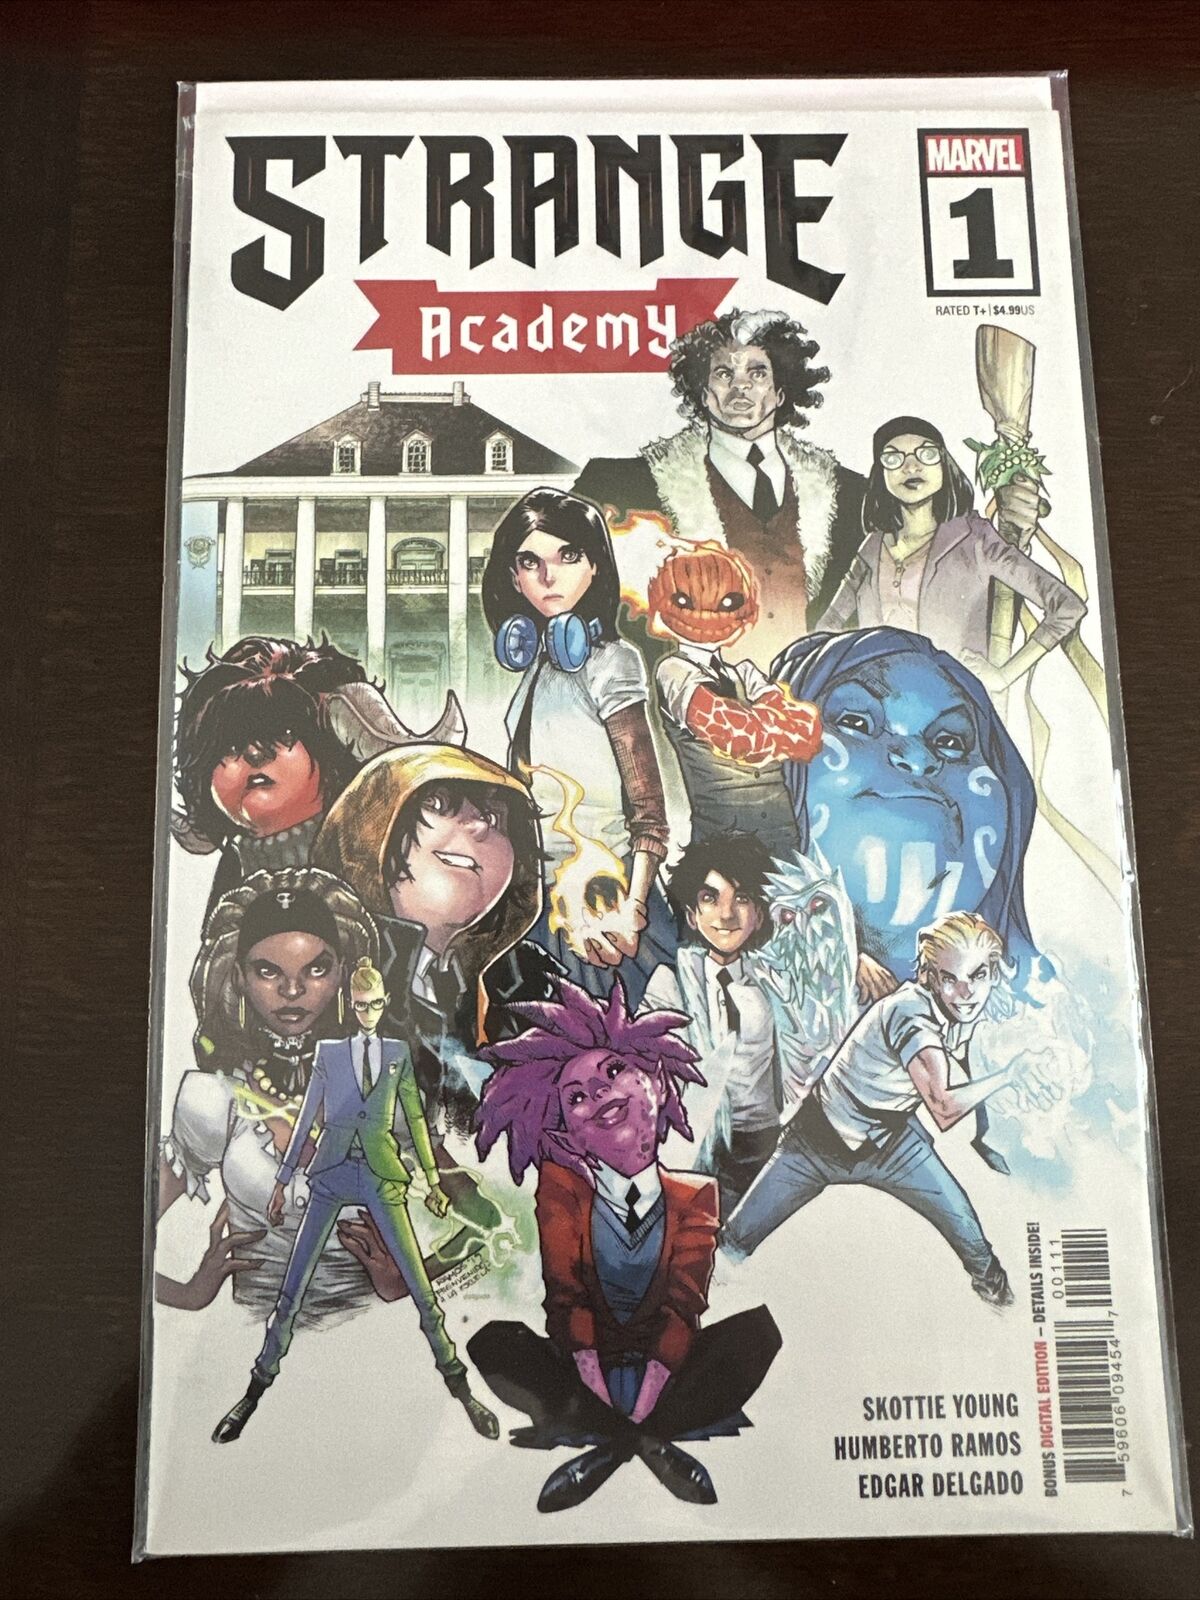 Strange Academy #1 1st Print CvR A. Marvel Comics 2020 Many 1st Appearances